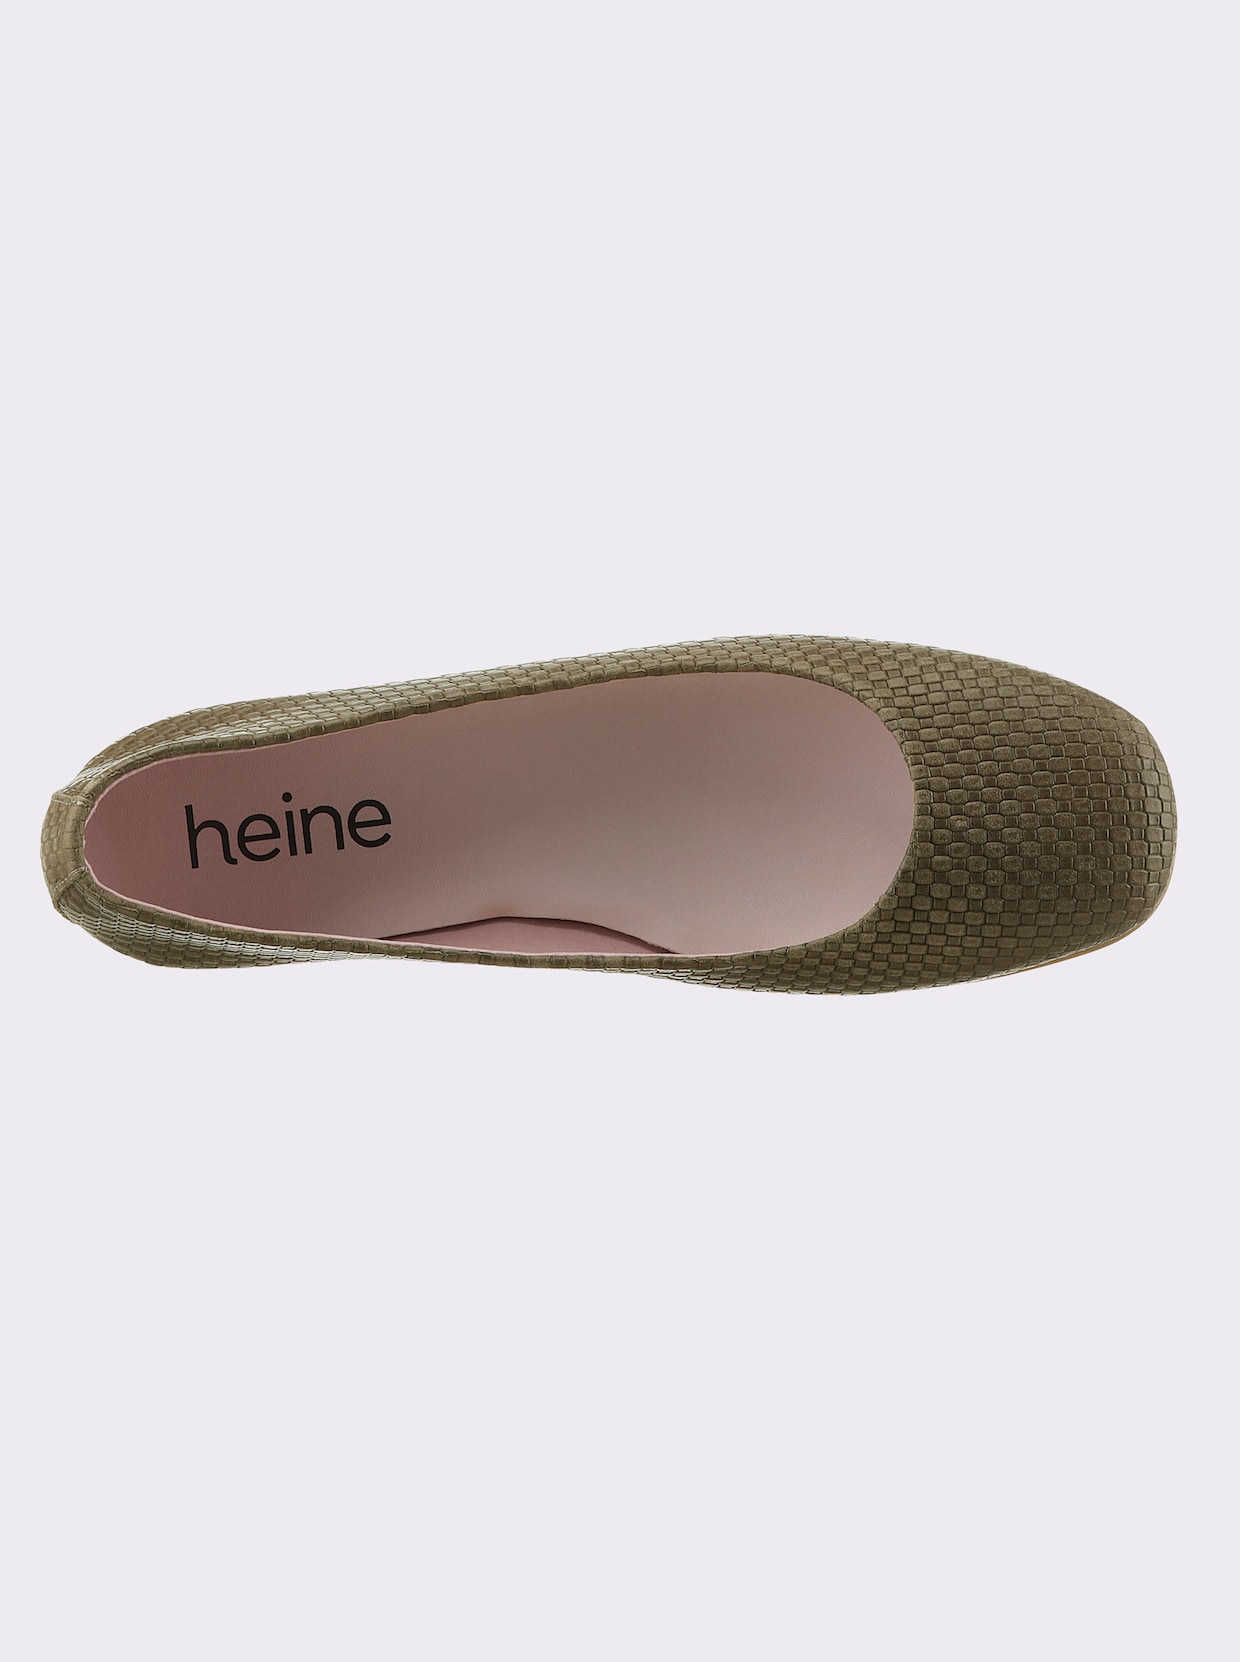 heine Ballerina - khaki